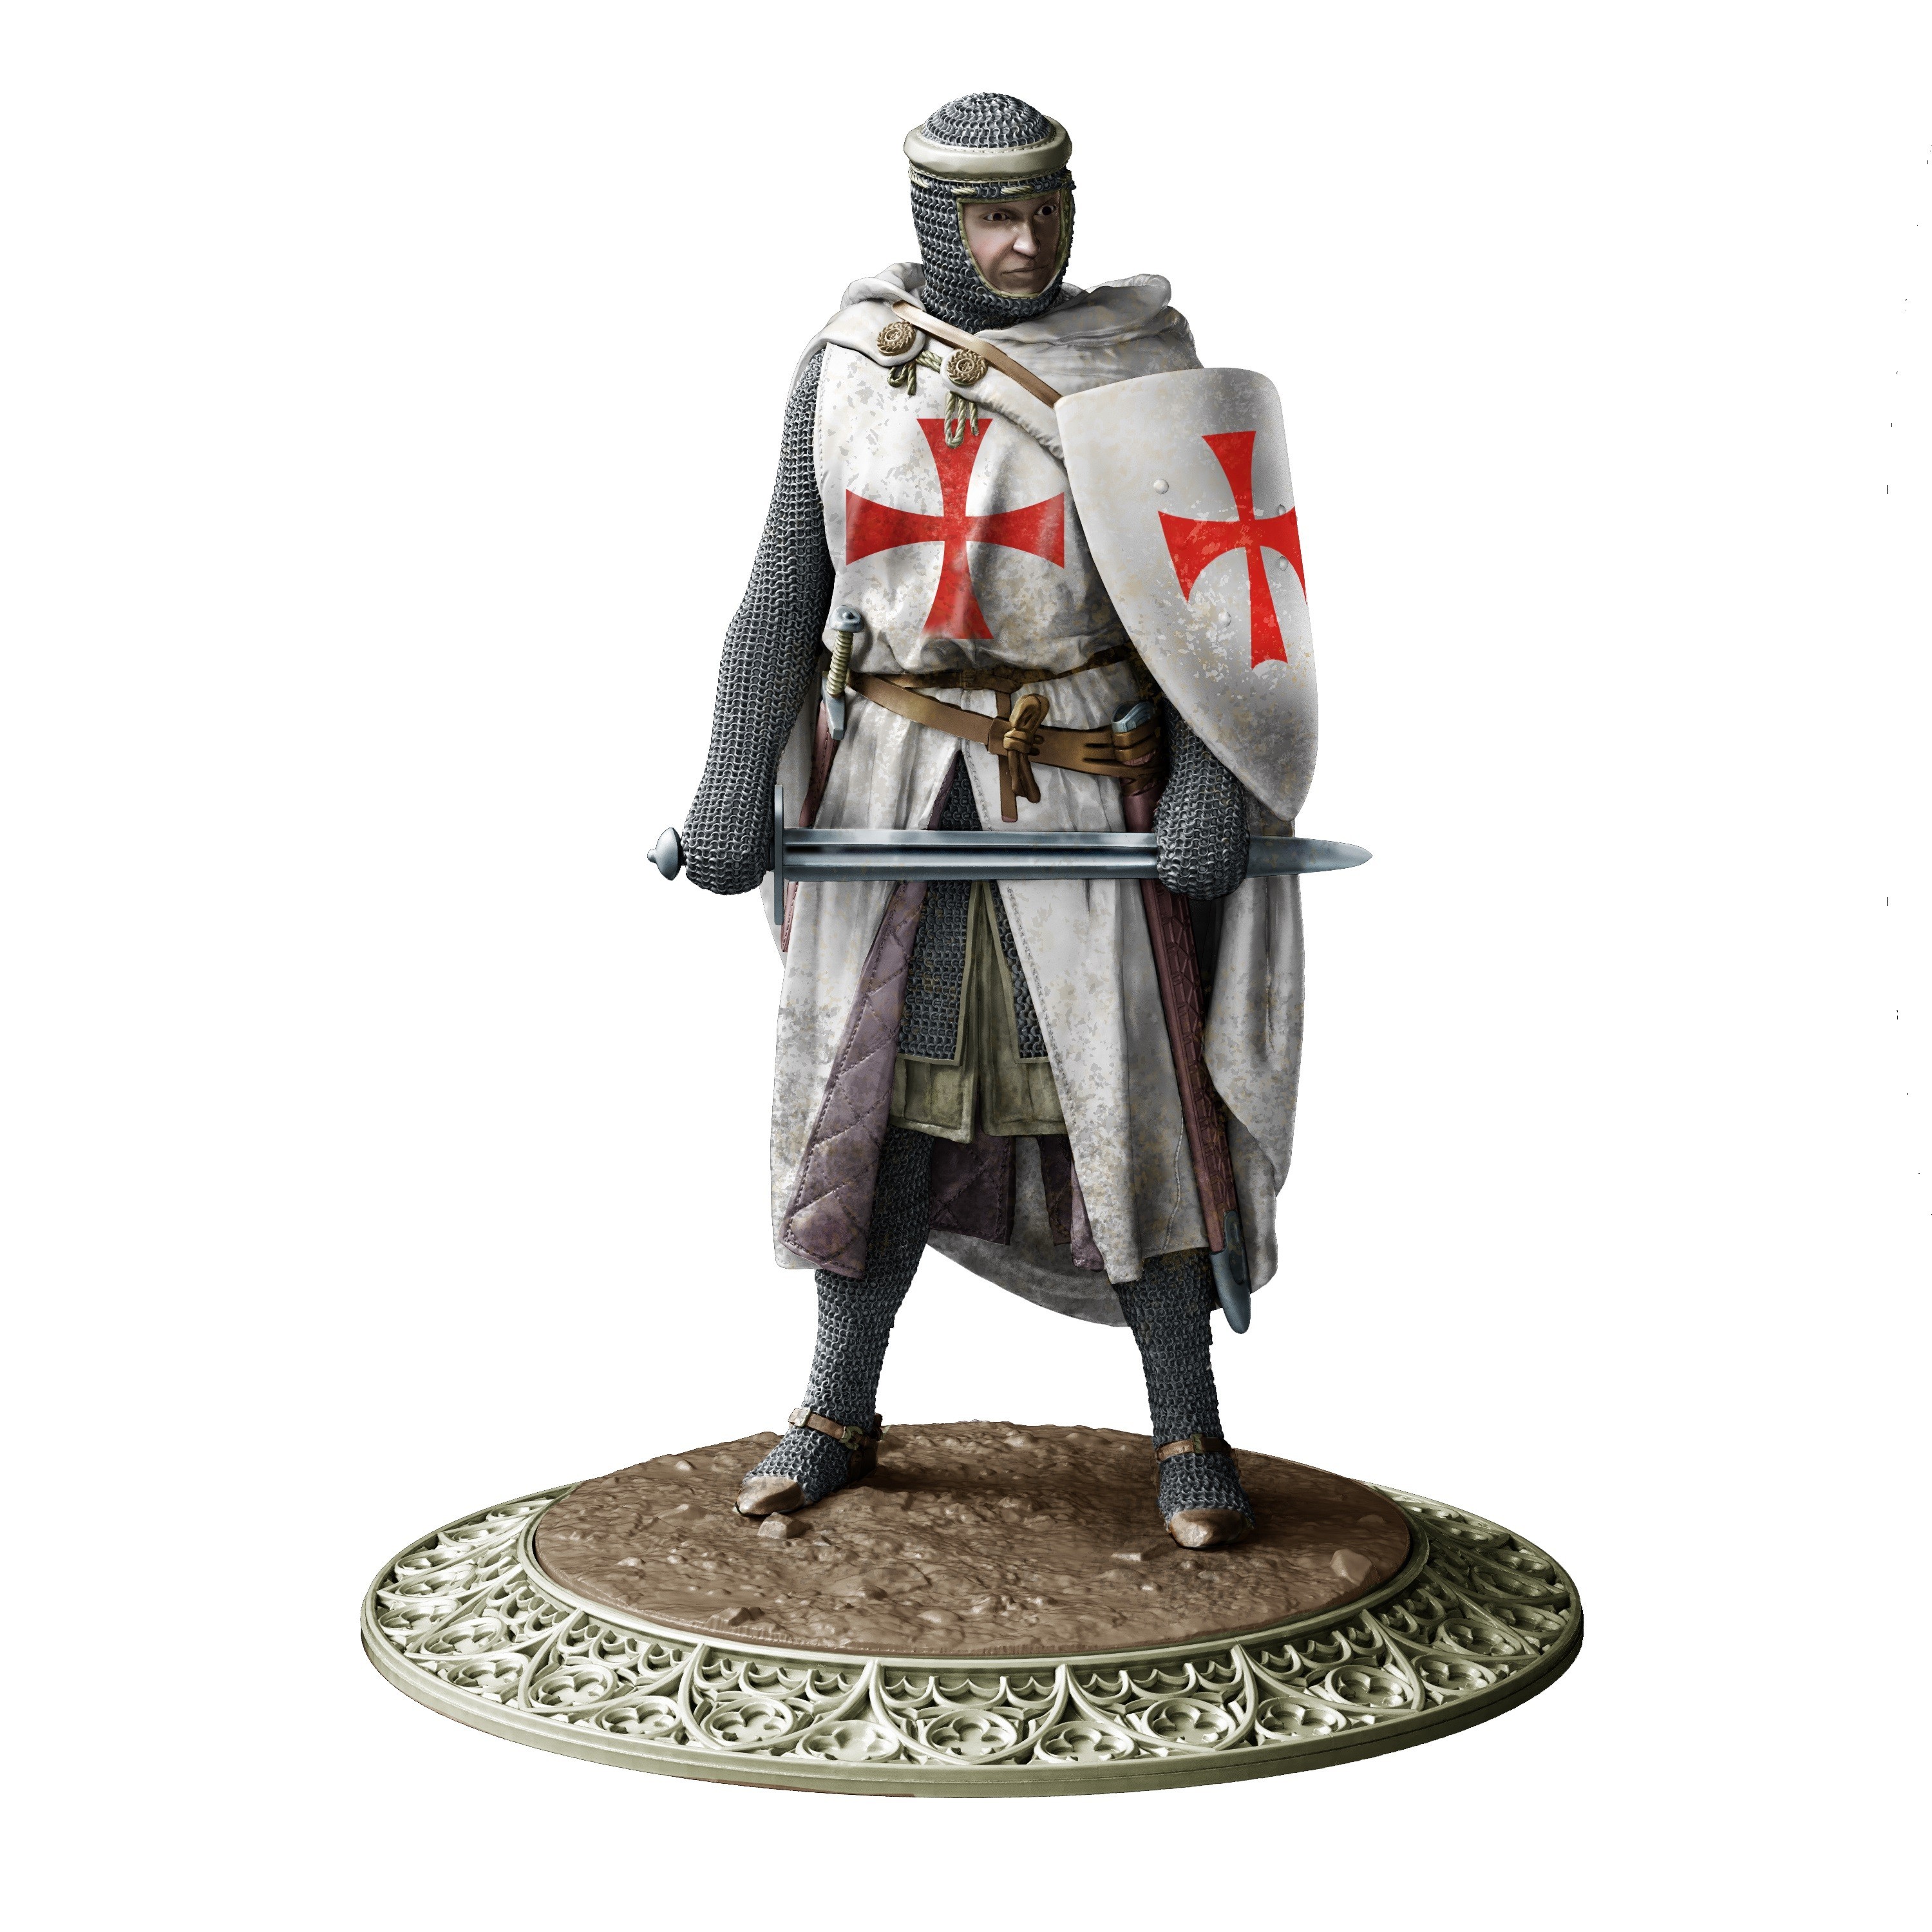 FI75-006 Crusade Knight, Beginning of 12th Century